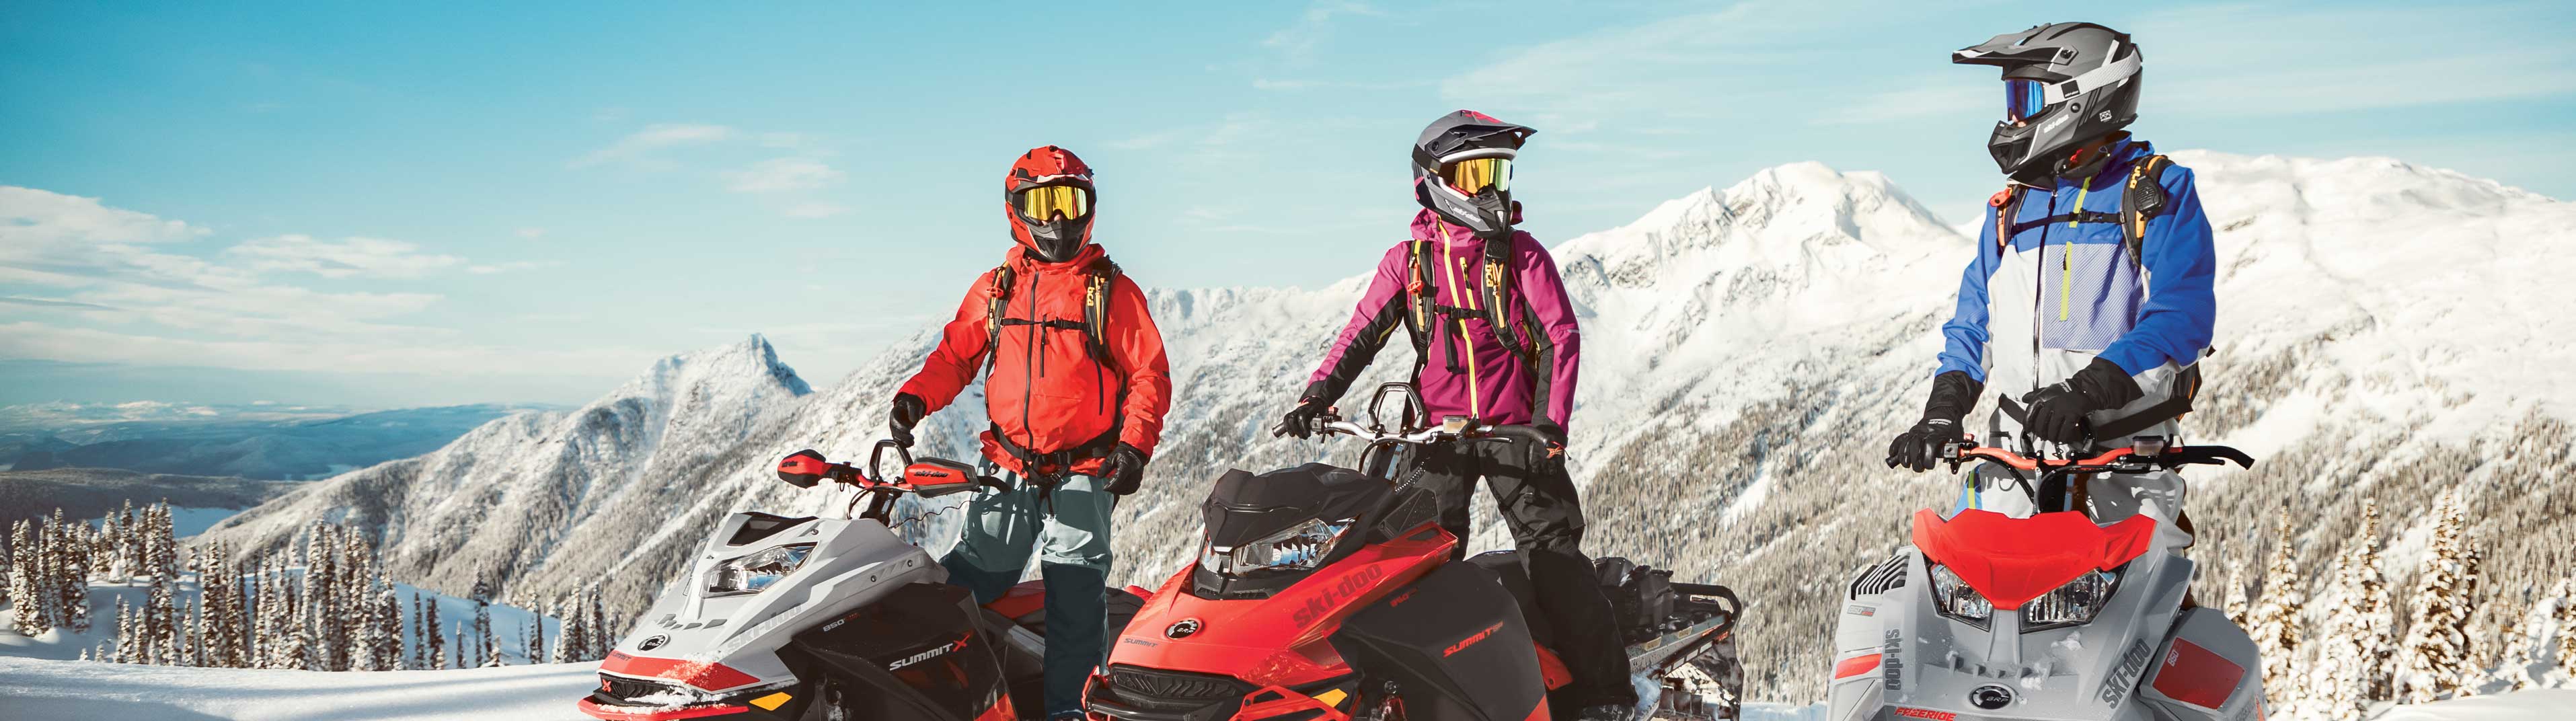 3 riders enjoying a snowmobile ride with Ski-Doo